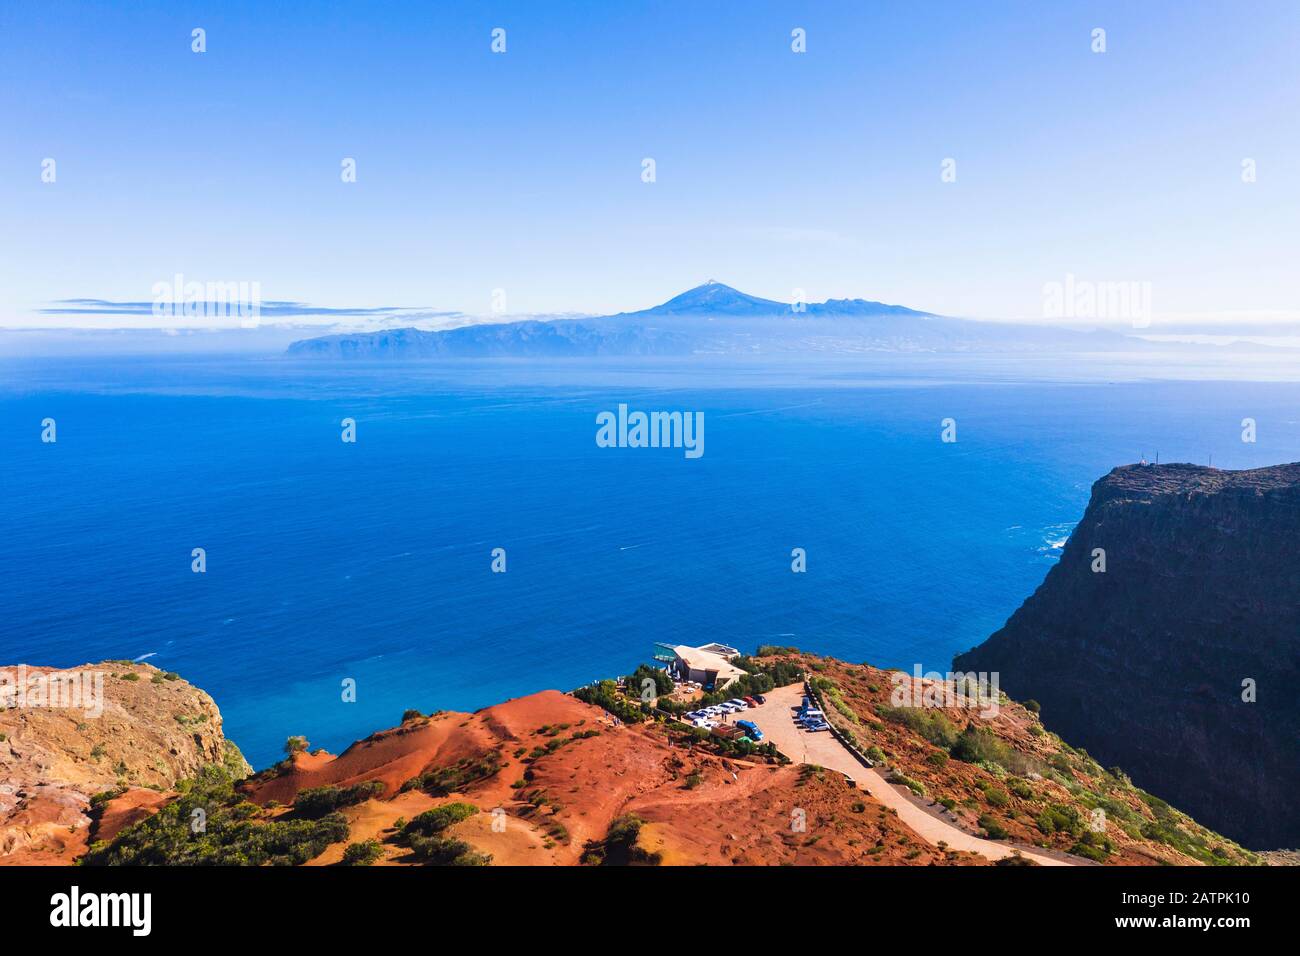 Viewpoint Mirador de Abrante with Skywalk, behind Tenerife, near Agulo, drone picture, La Gomera, Canary Islands, Spain Stock Photo